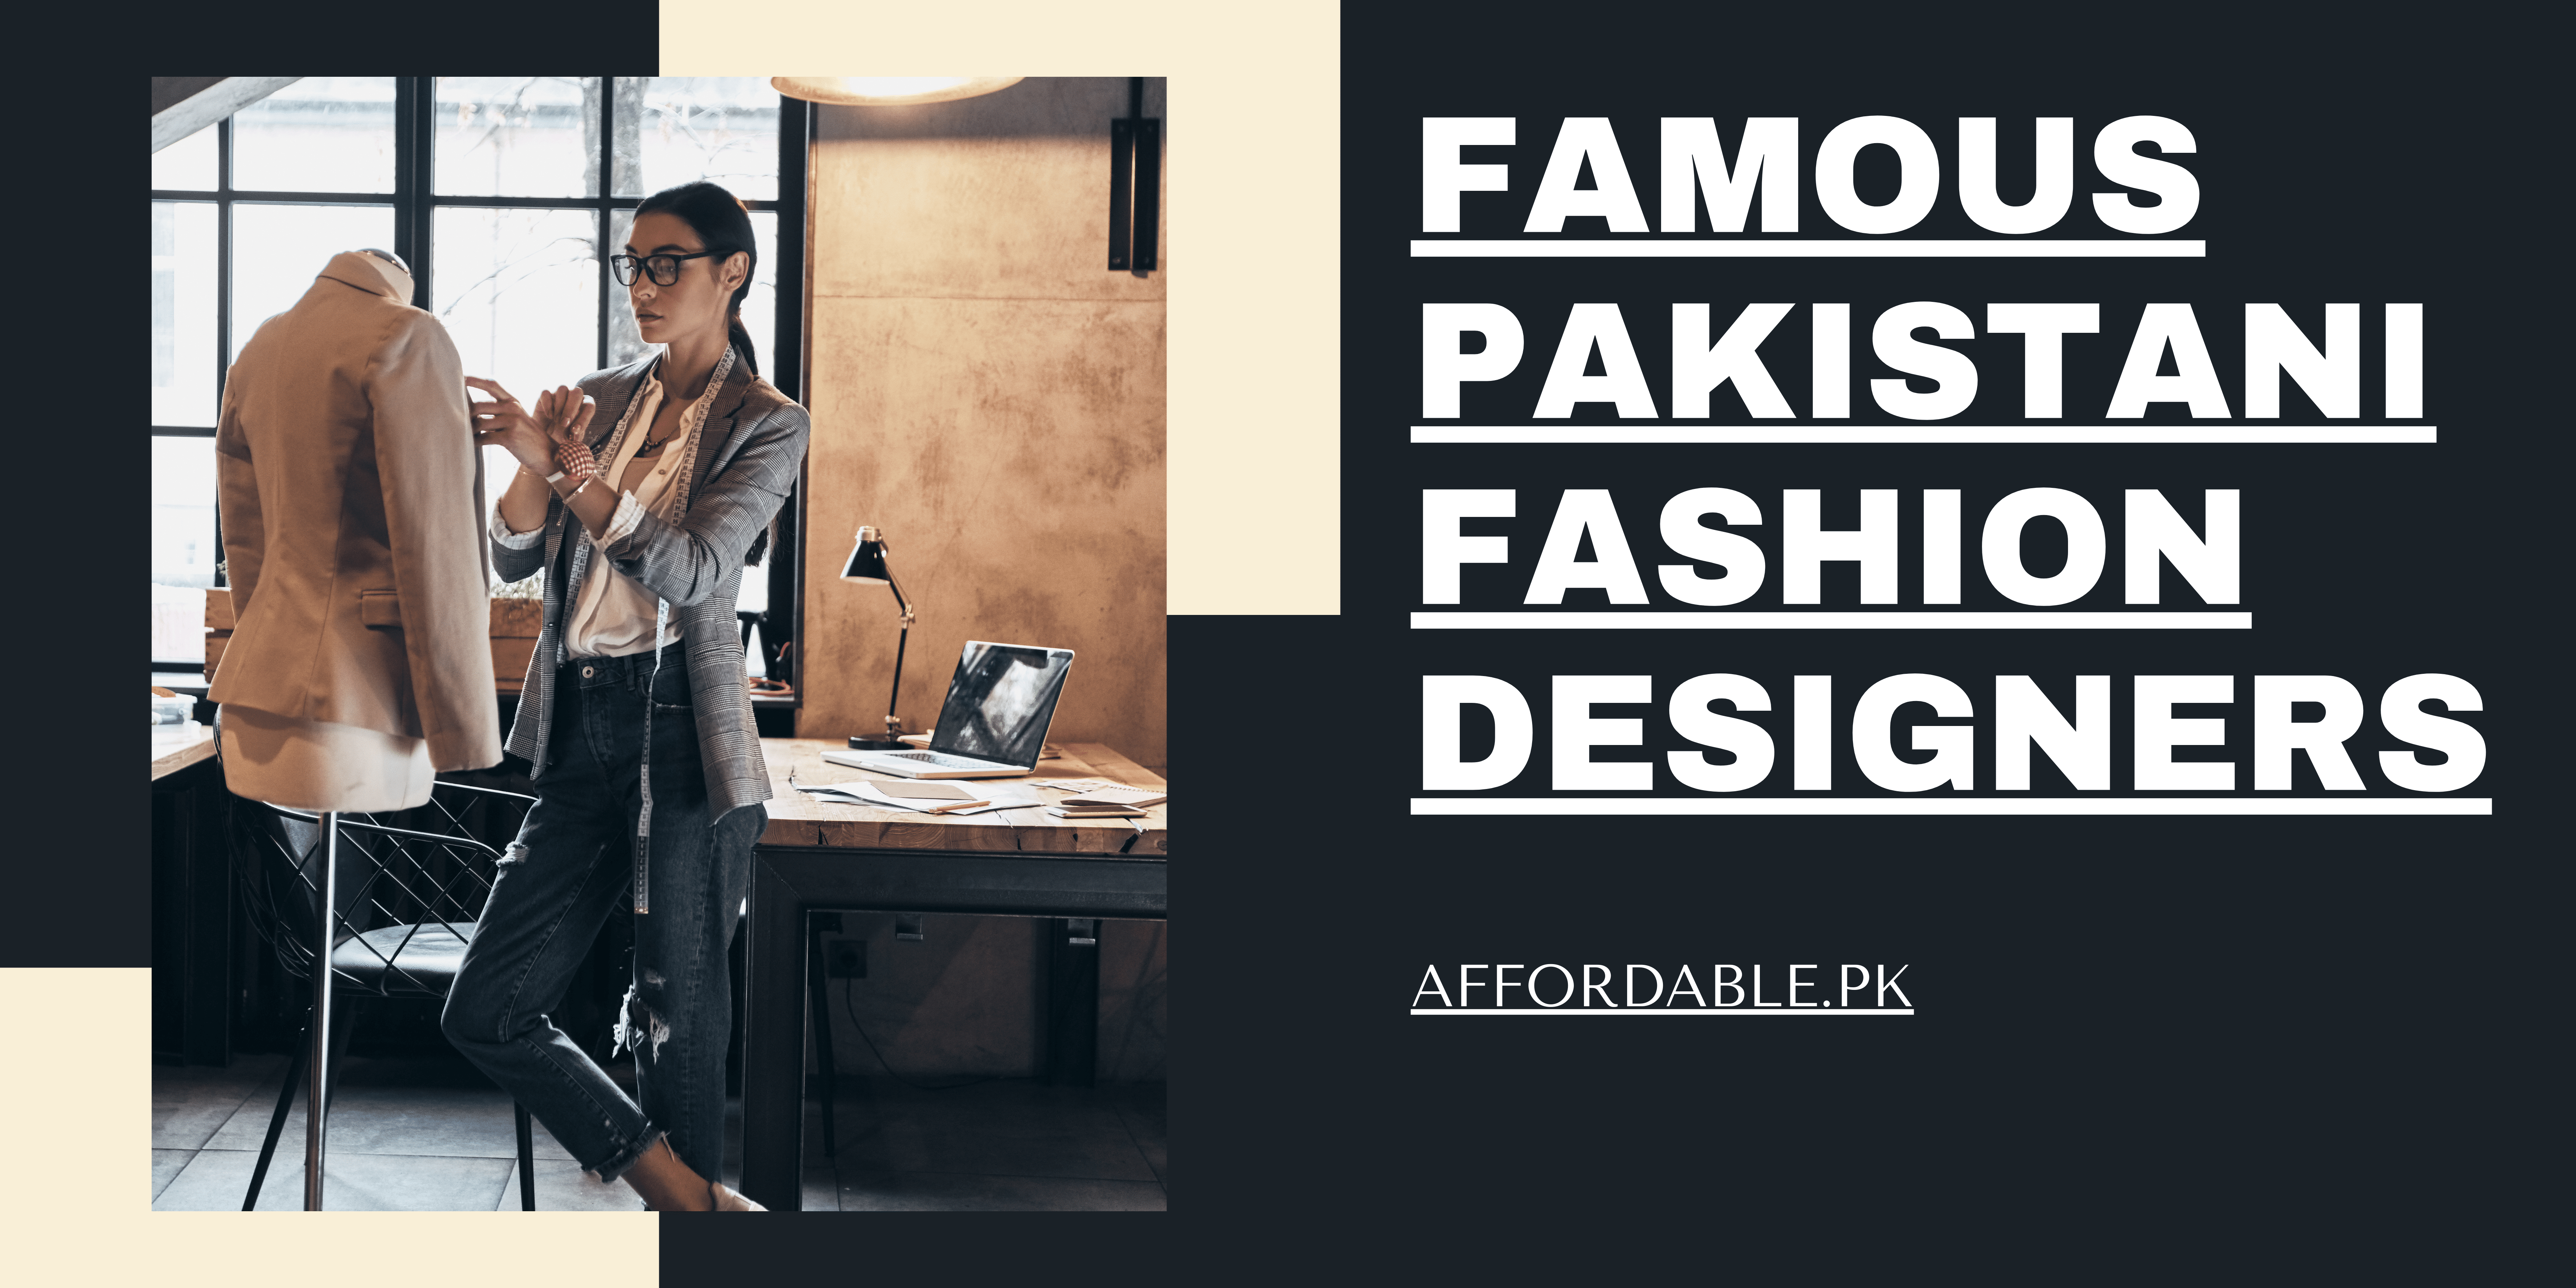 Famous Pakistani Fashion Designers